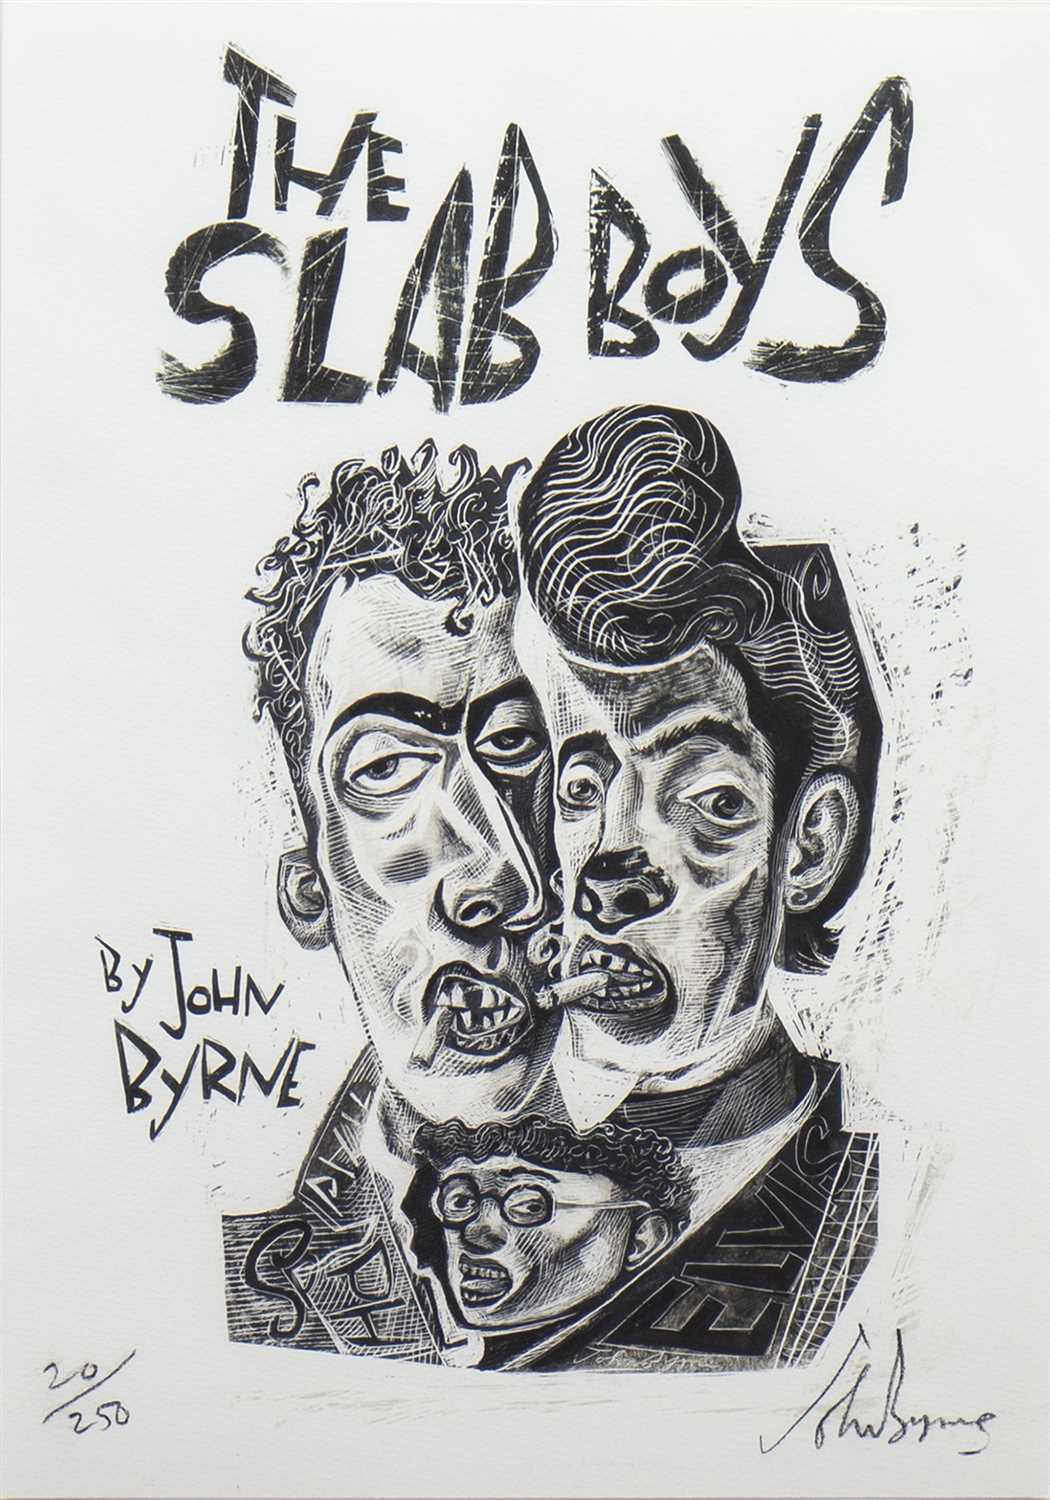 Lot 508 - SLAB BOYS, A LITHOGRAPH BY JOHN BYRNE